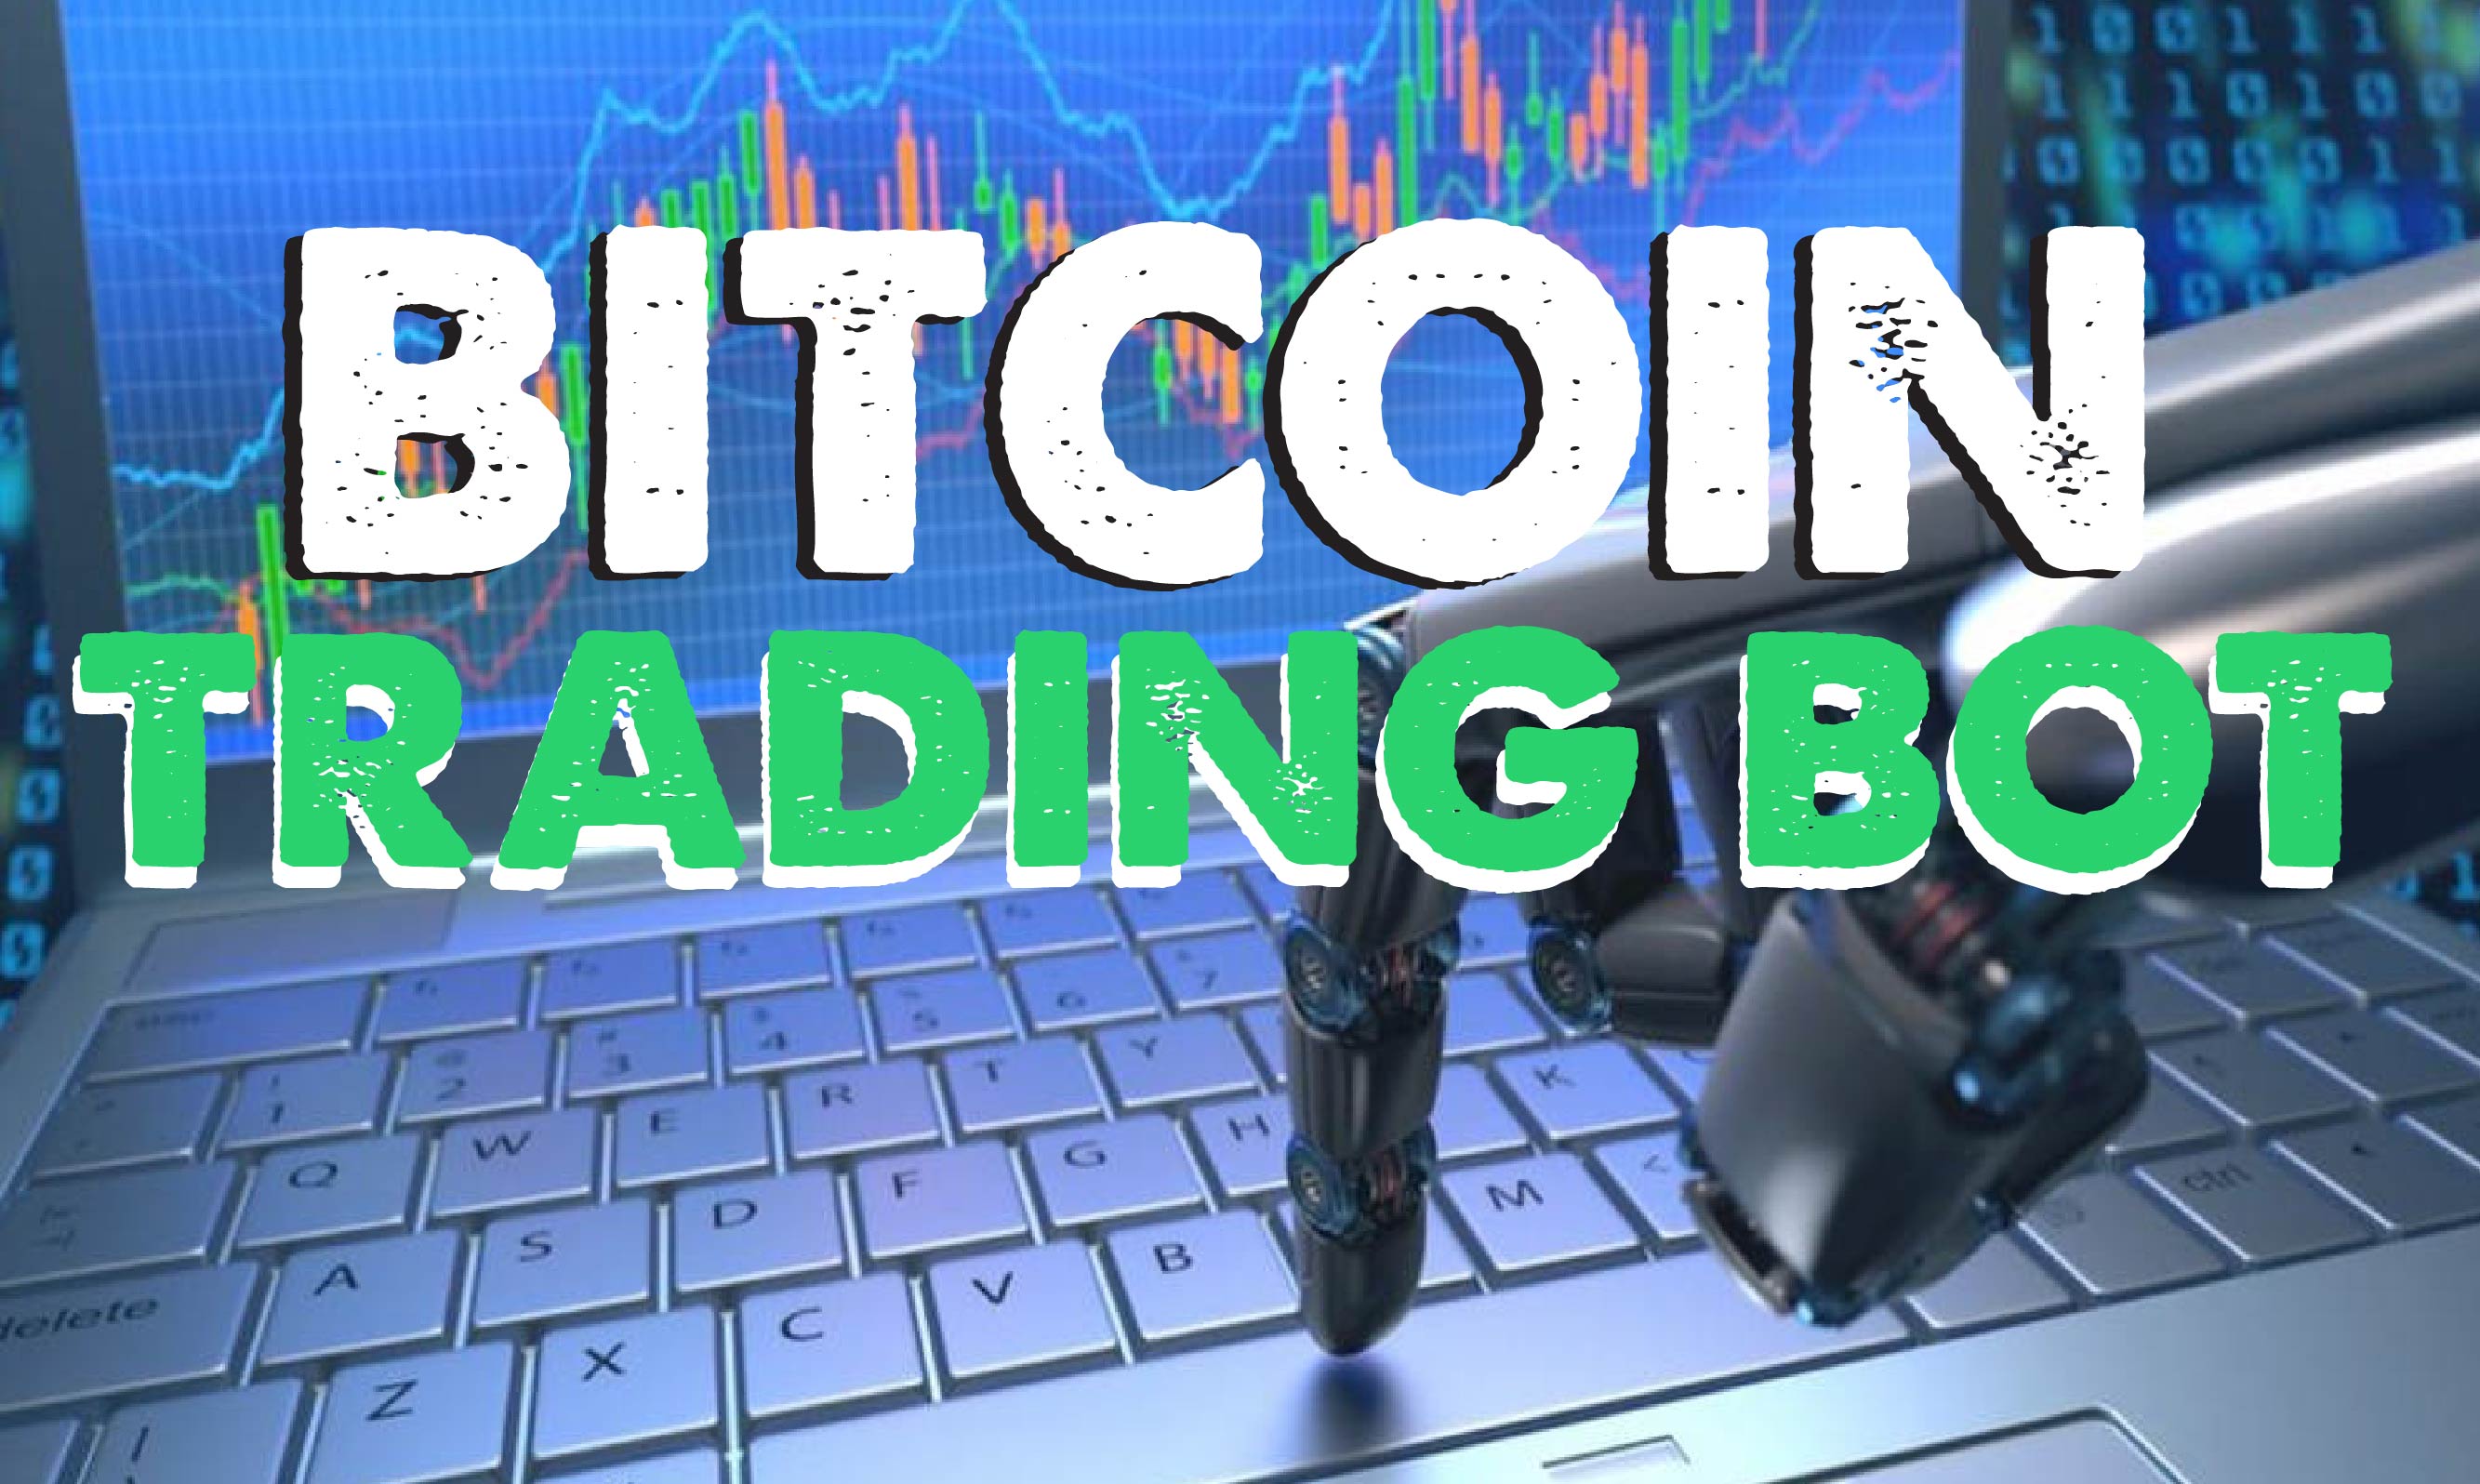 carabuat robot trading bitcoin